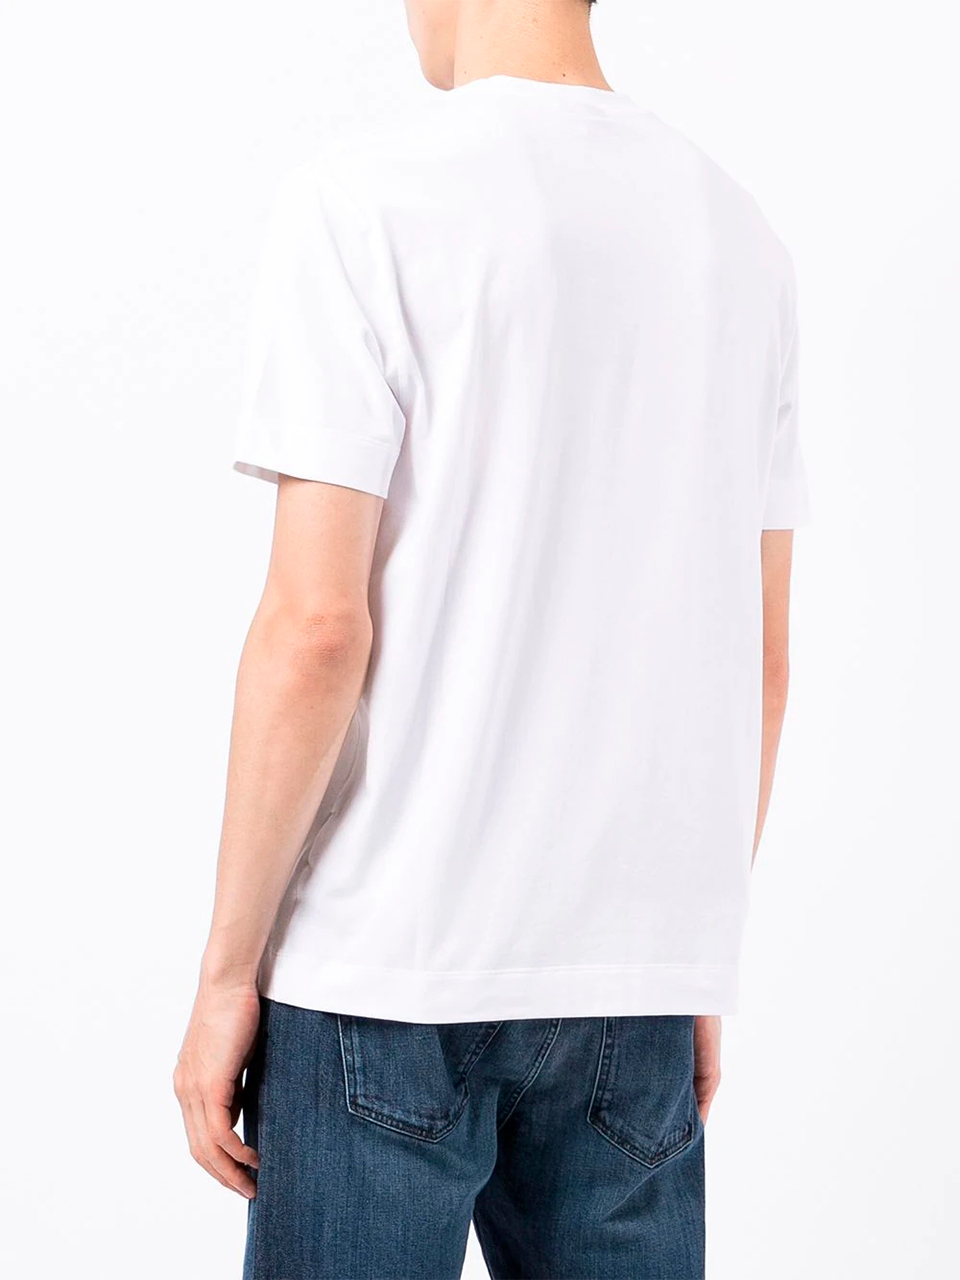 Imagem de: Camiseta Emporio Armani Branca com Estampa Bicolor